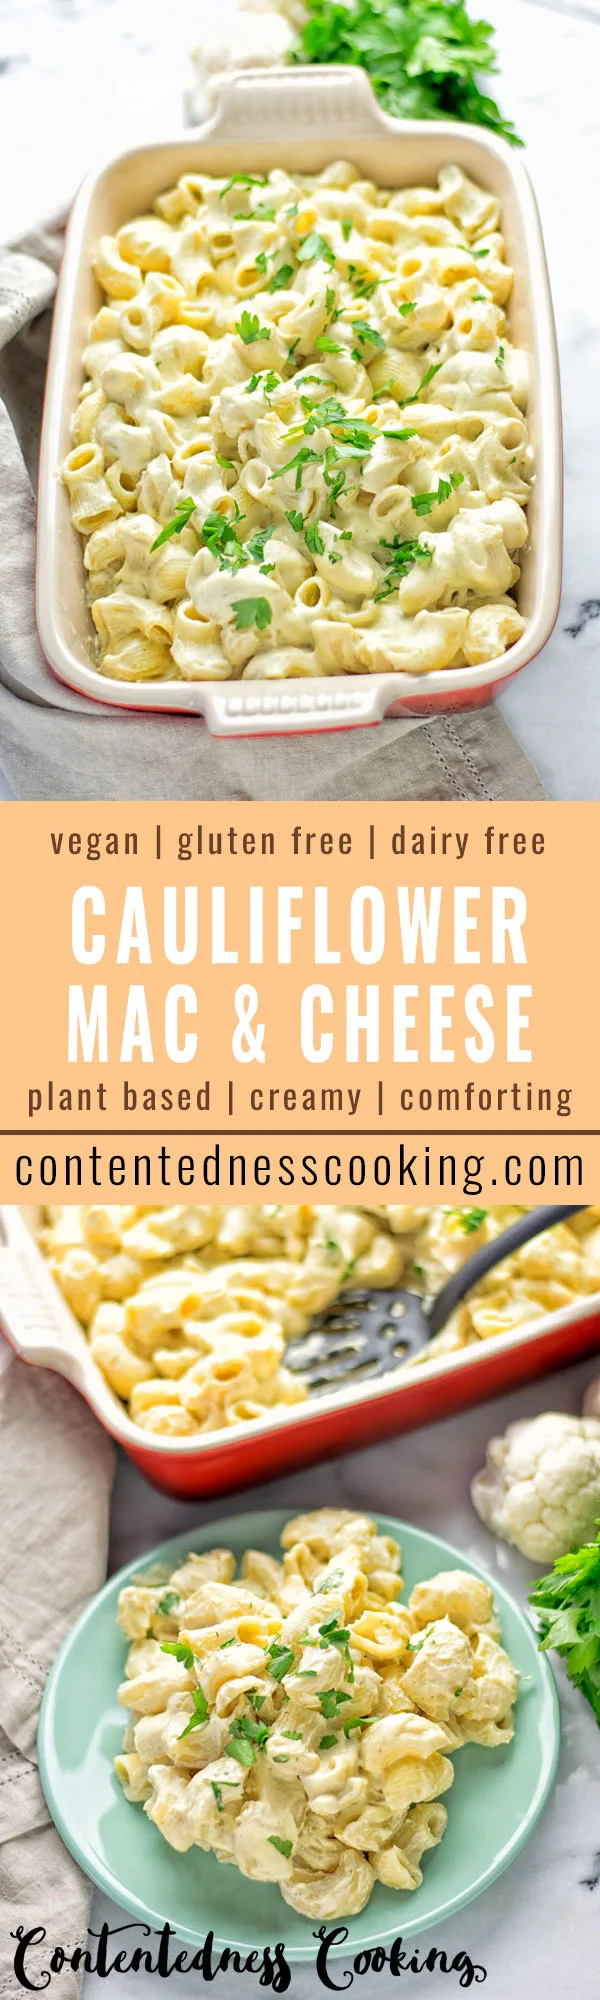 Cauliflower Mac & Cheese | #vegan #glutenfree #contentednesscooking